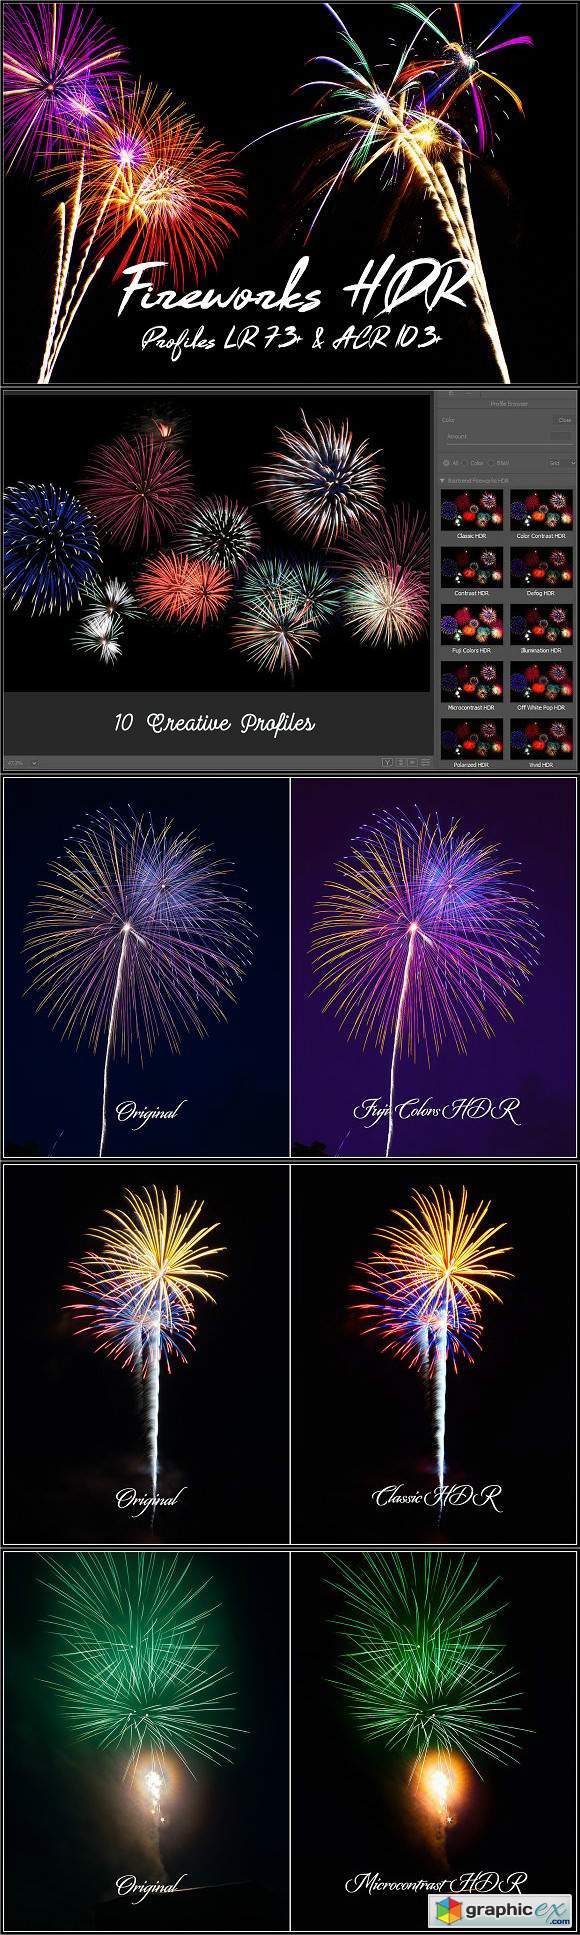 Fireworks HDR Profiles LR7,3 & ACR